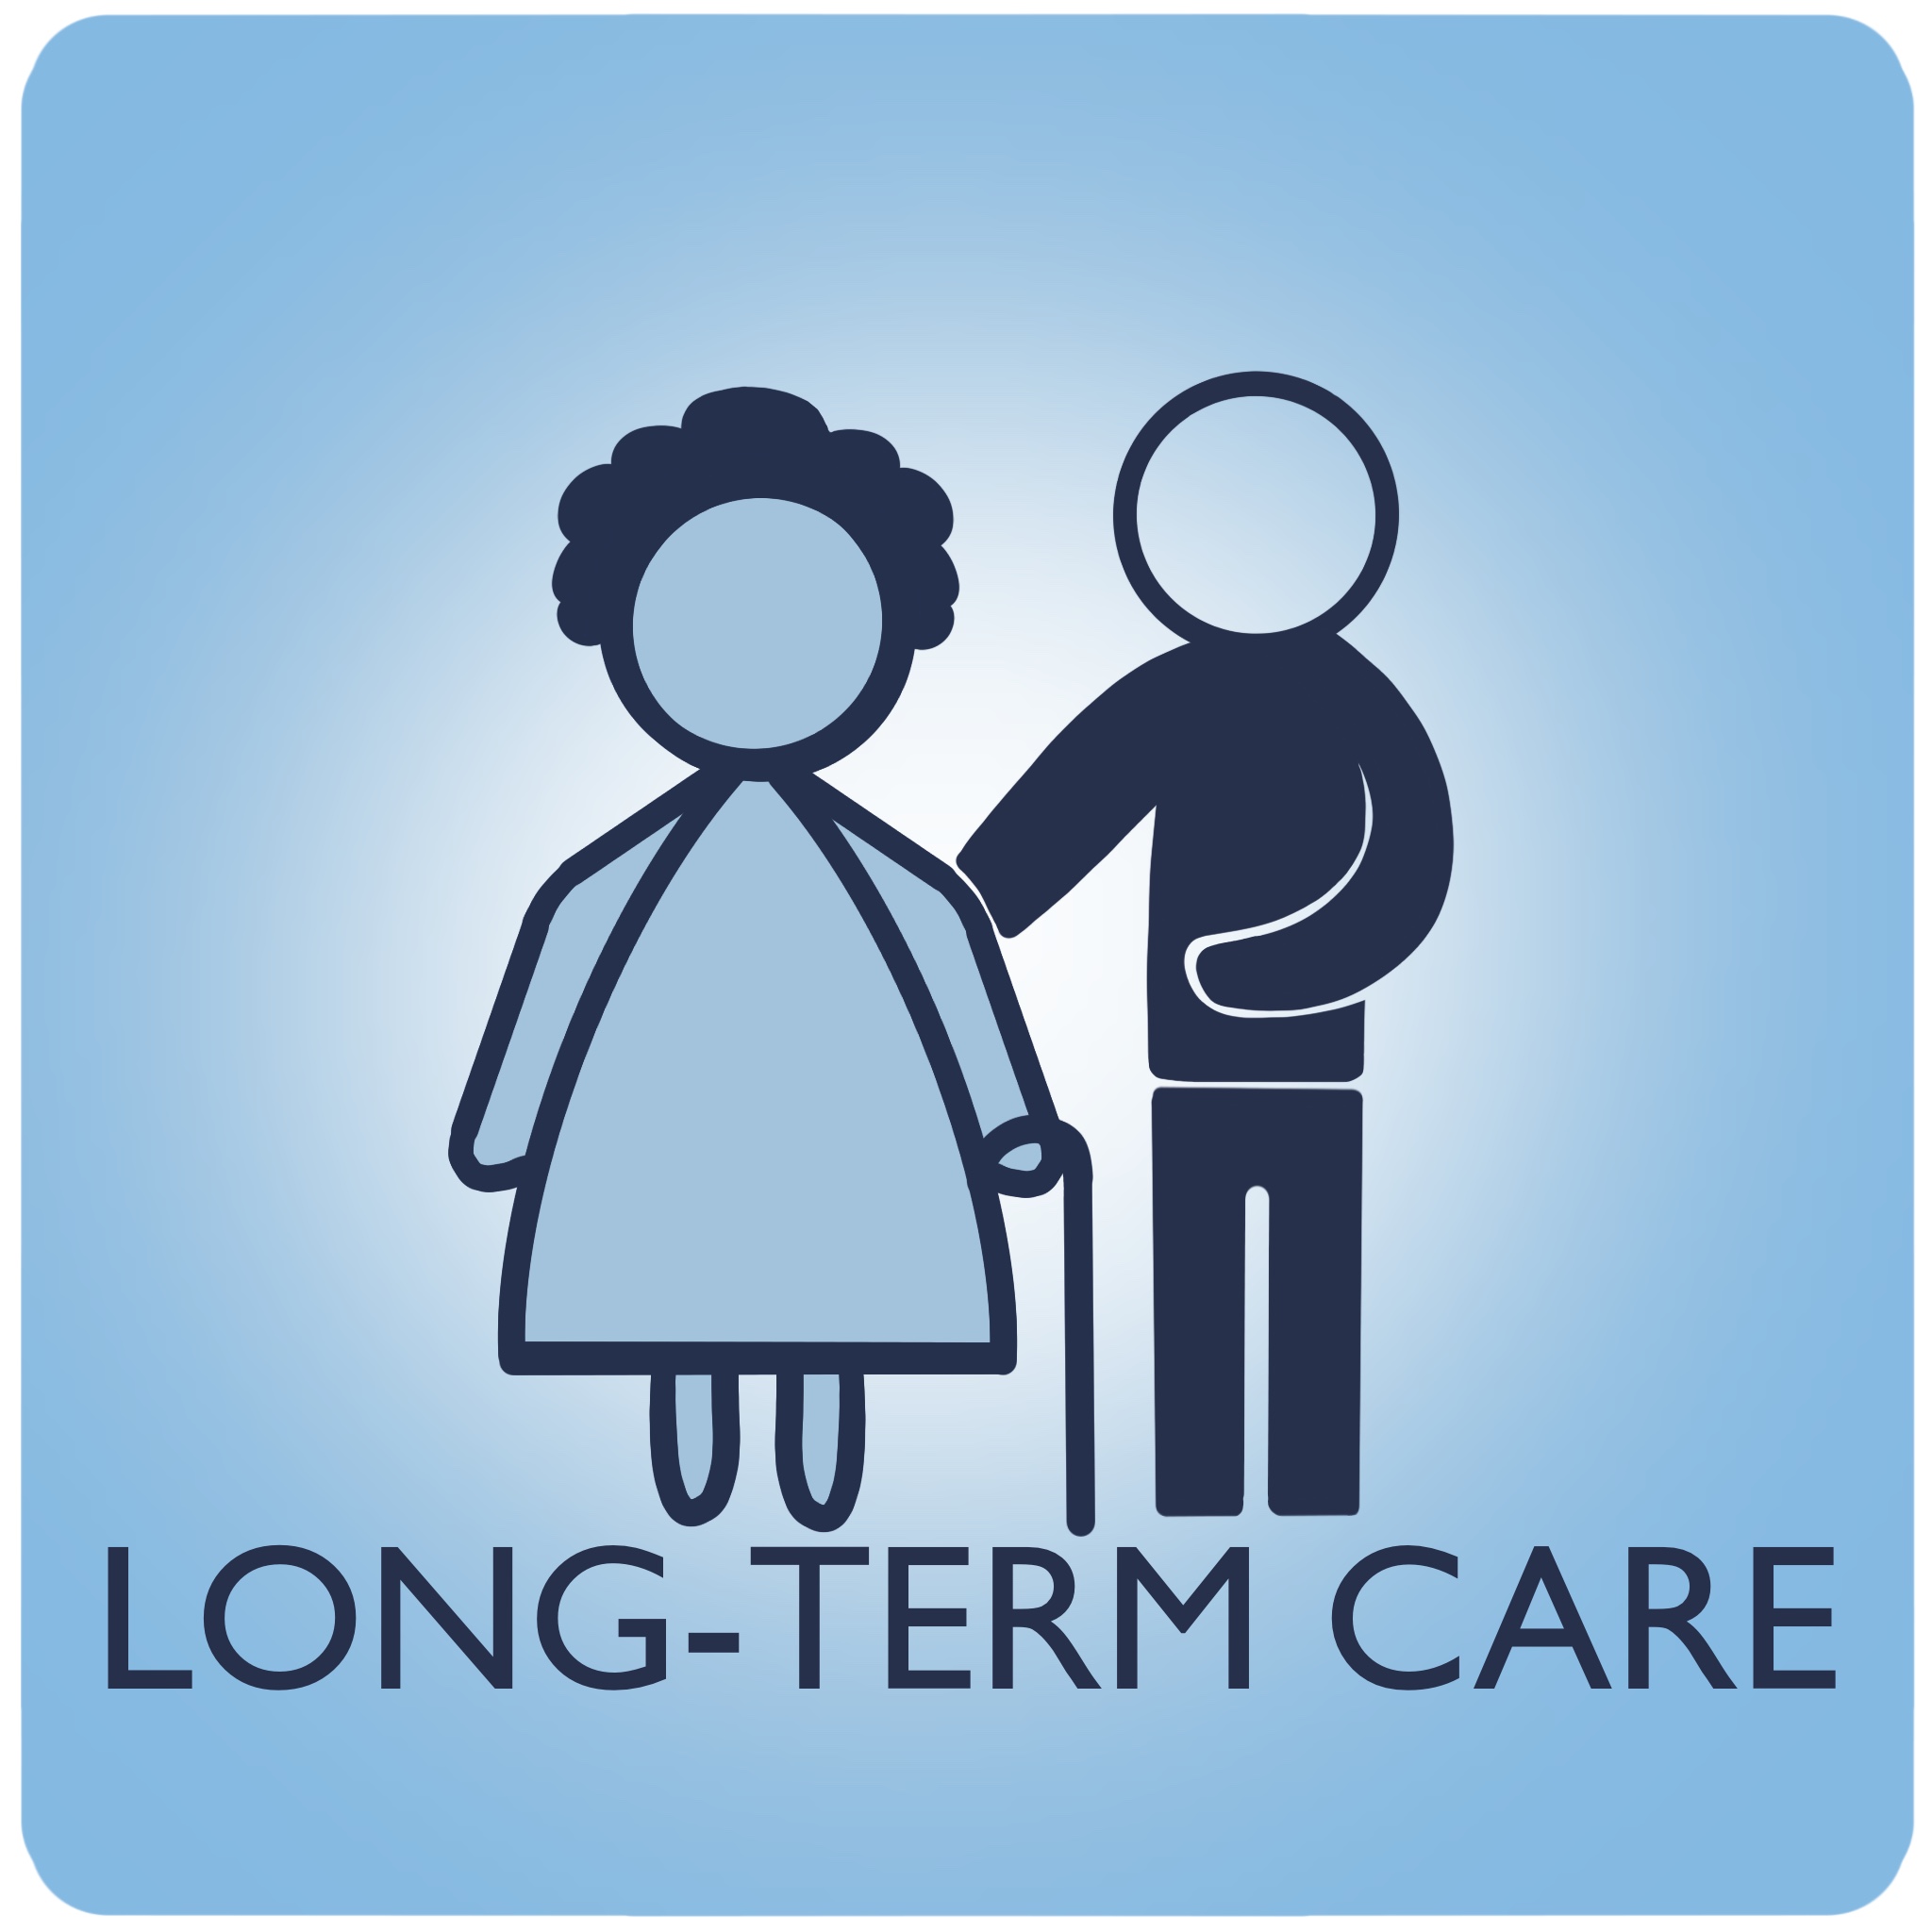 Long-Term Care